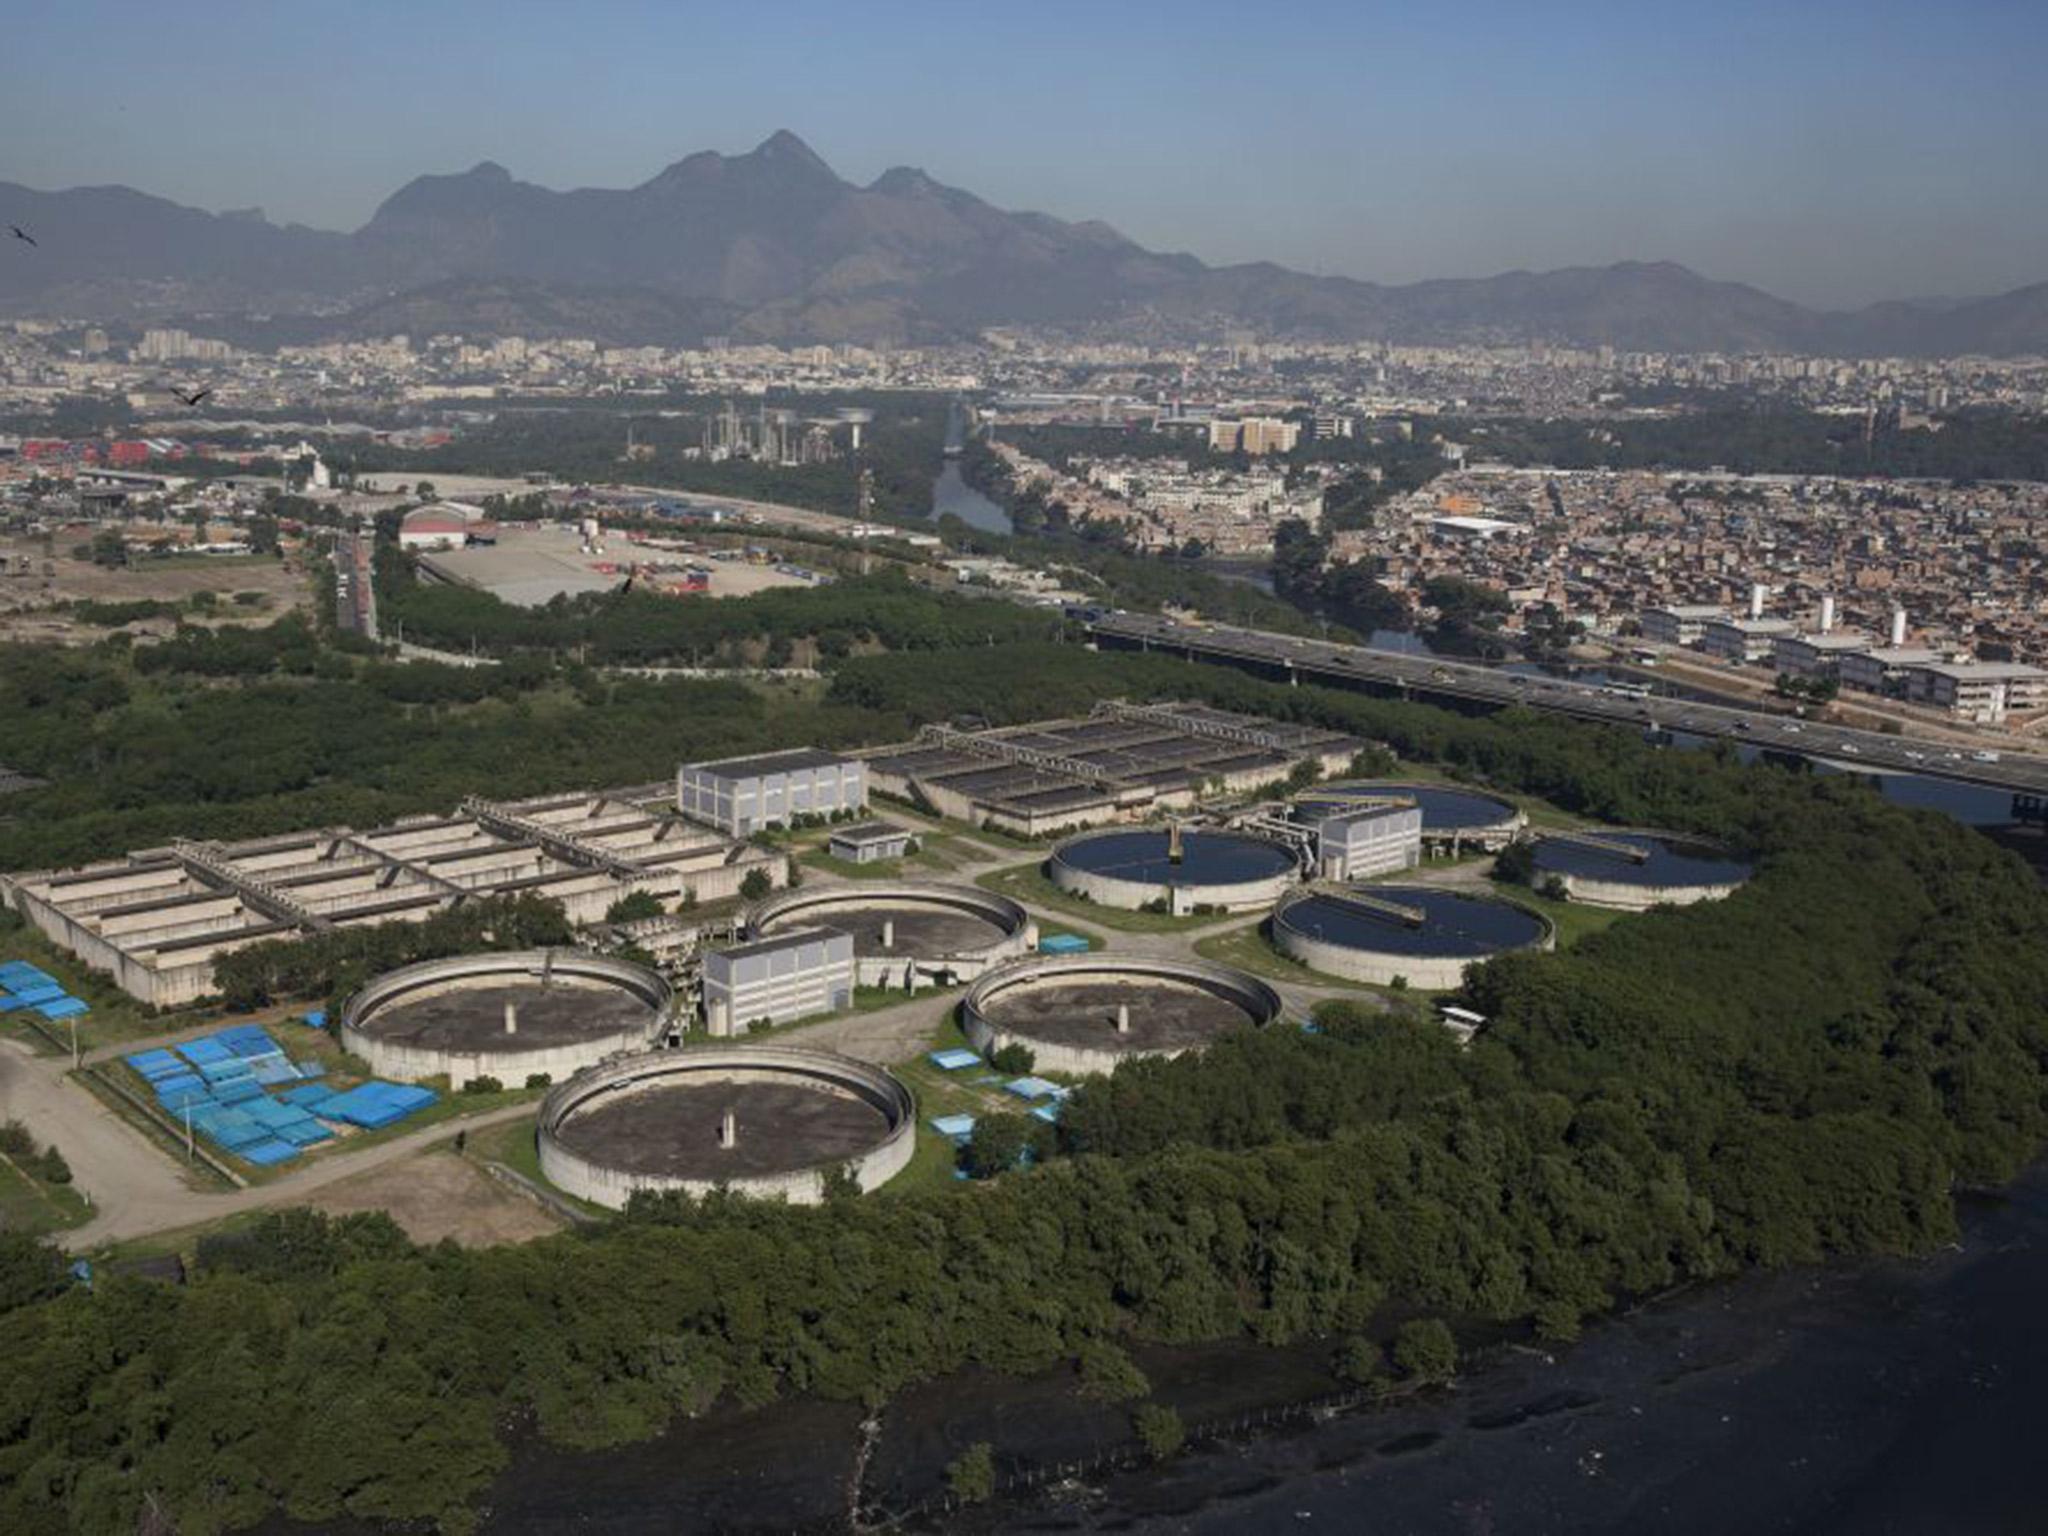 The Alegria Sewage Treatment Plant operates alongside Guanabara Bay in Rio